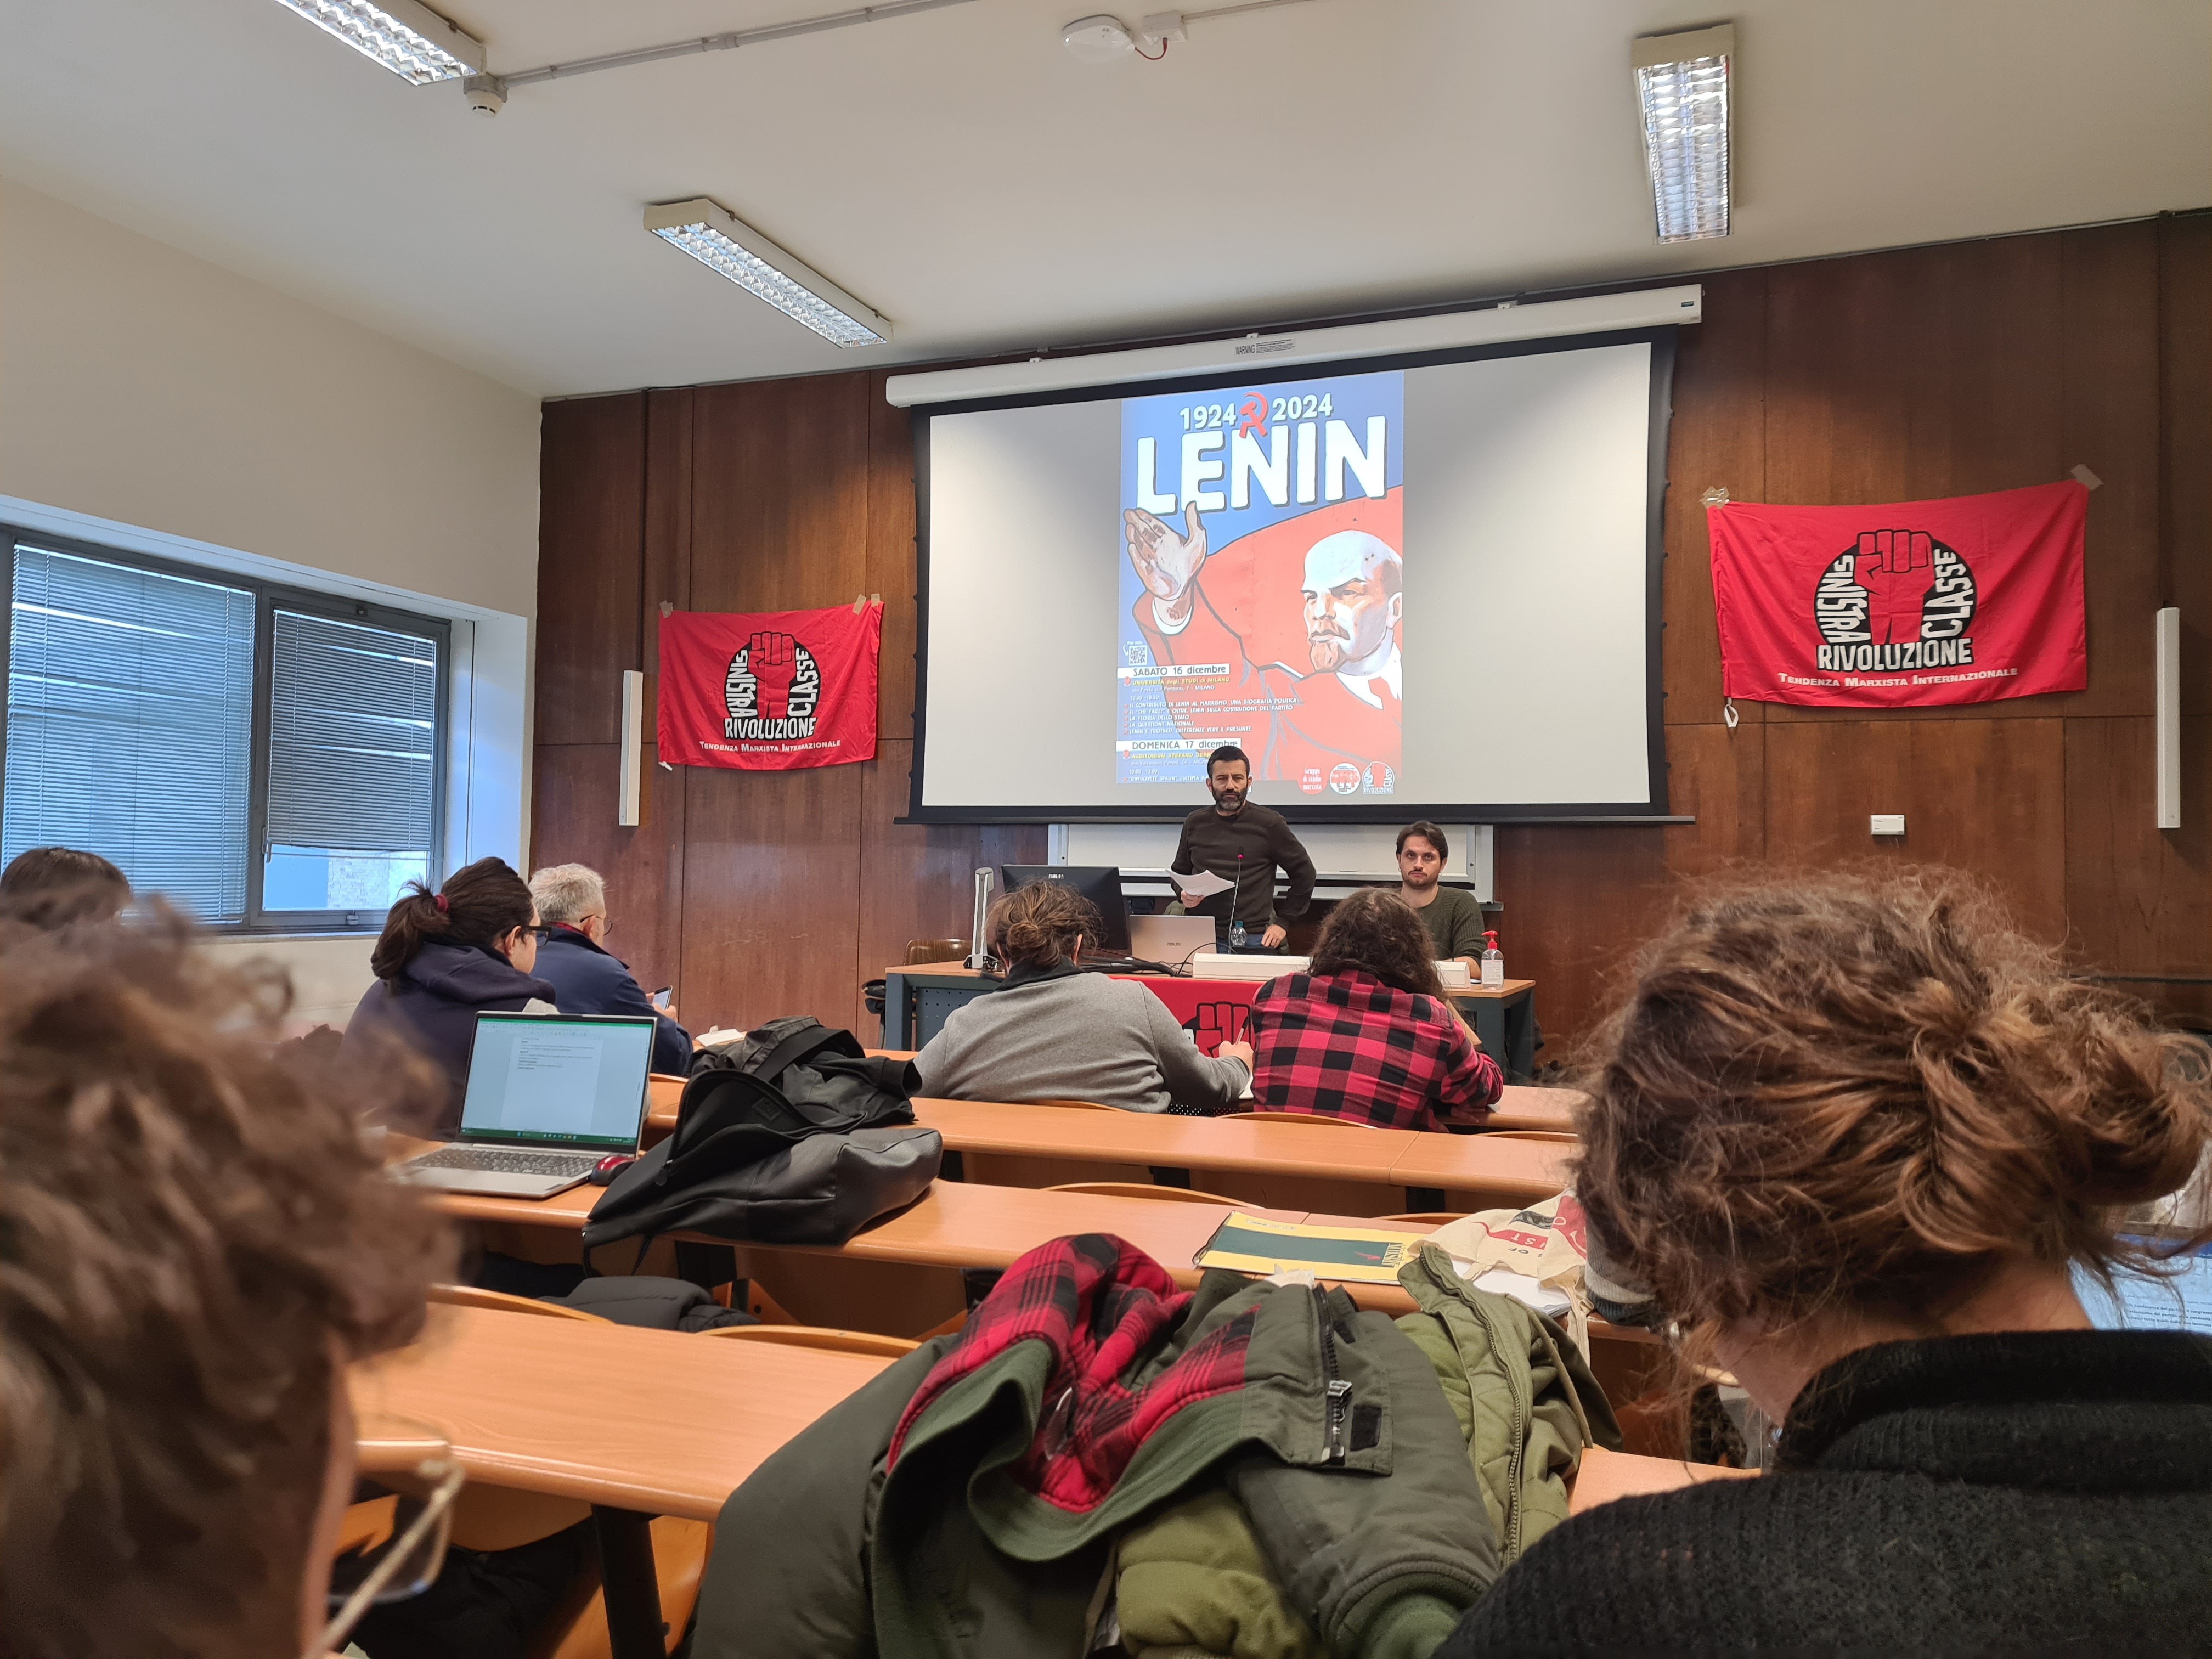 Lenin Image SCR